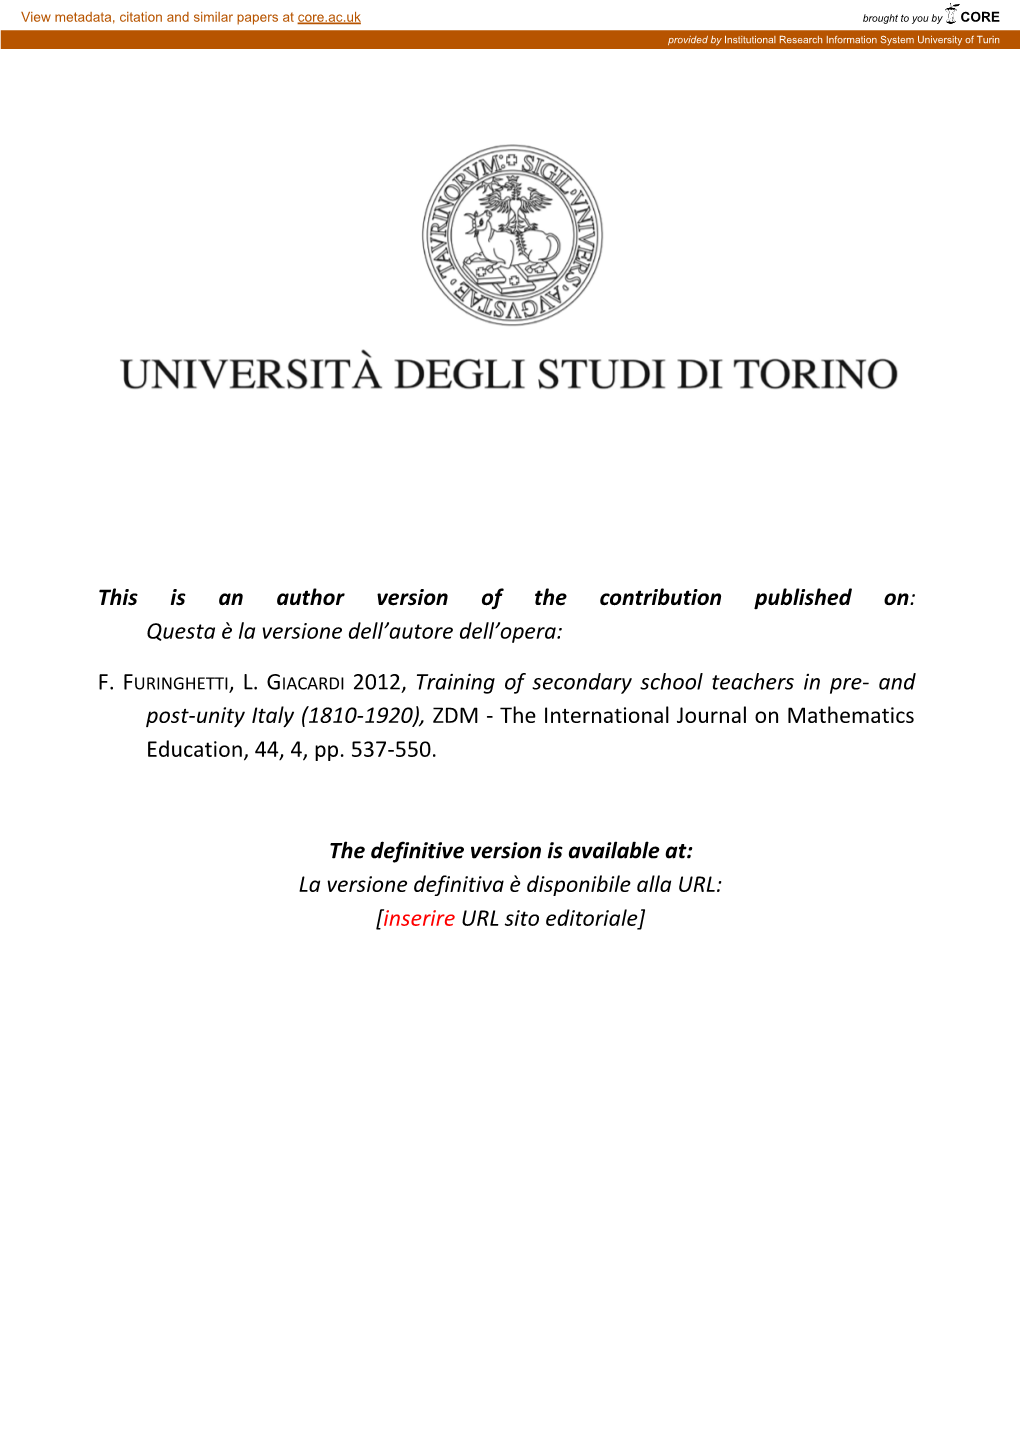 This Is an Author Version of the Contribution Published On: Questa È La Versione Dell’Autore Dell’Opera